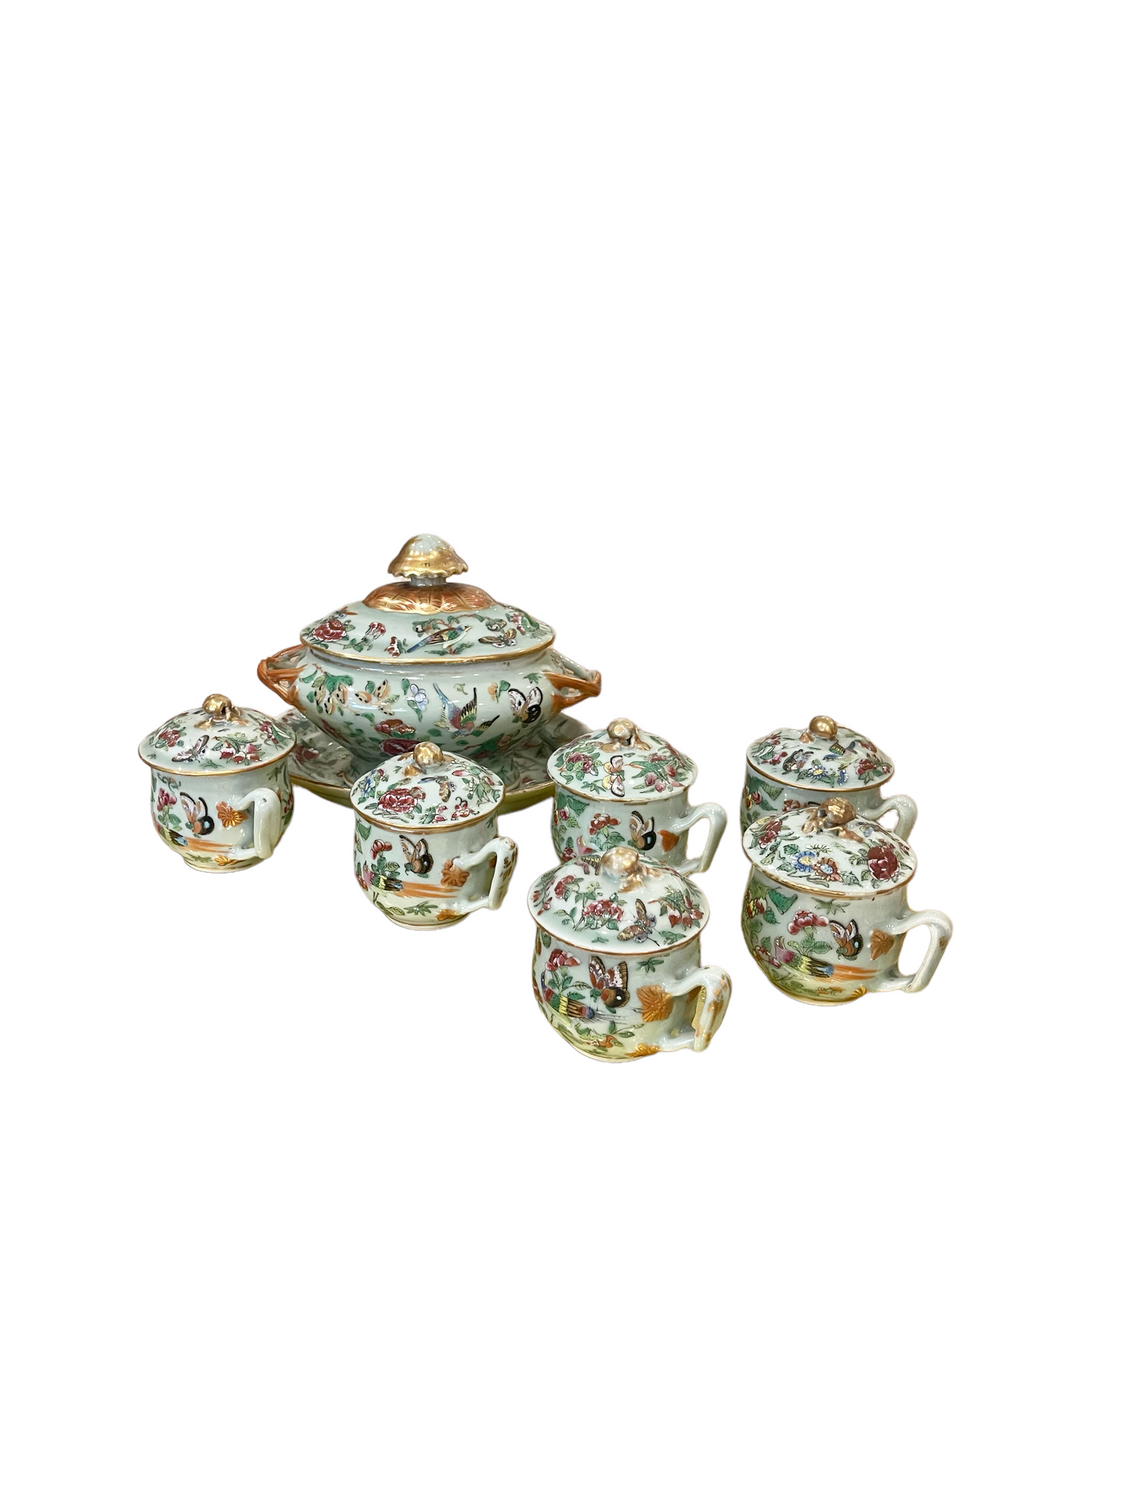 Vintage Chinese Import Celadon Green Rose "Pots de Creme" Set